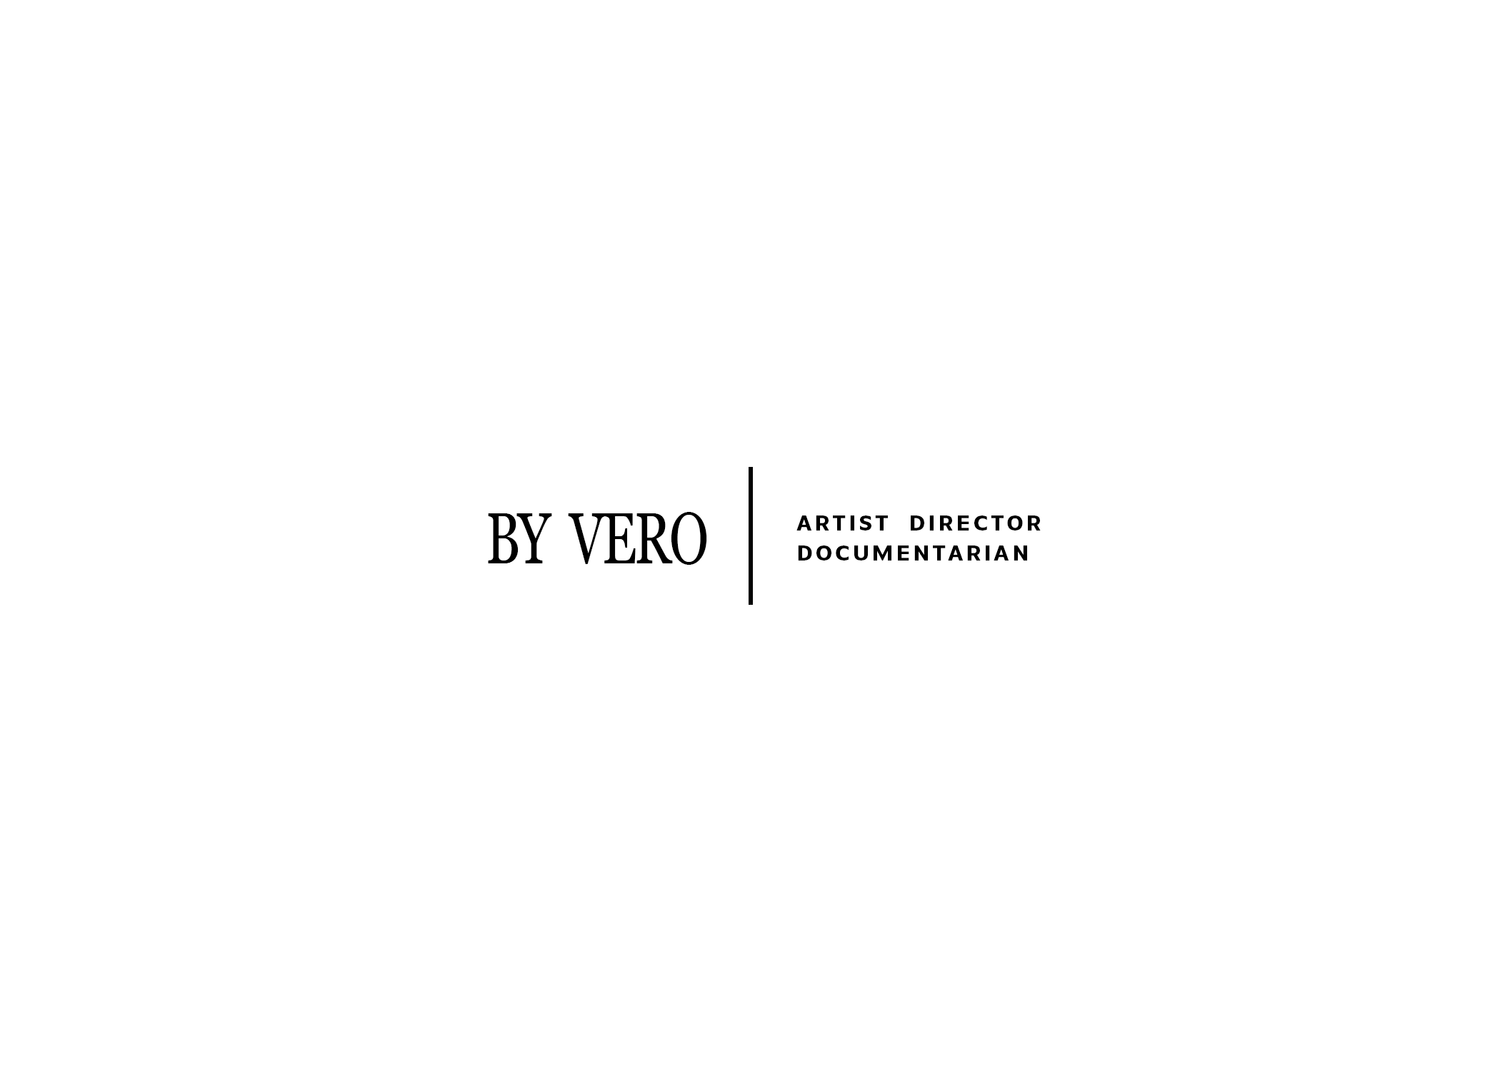 BY VERO, LLC